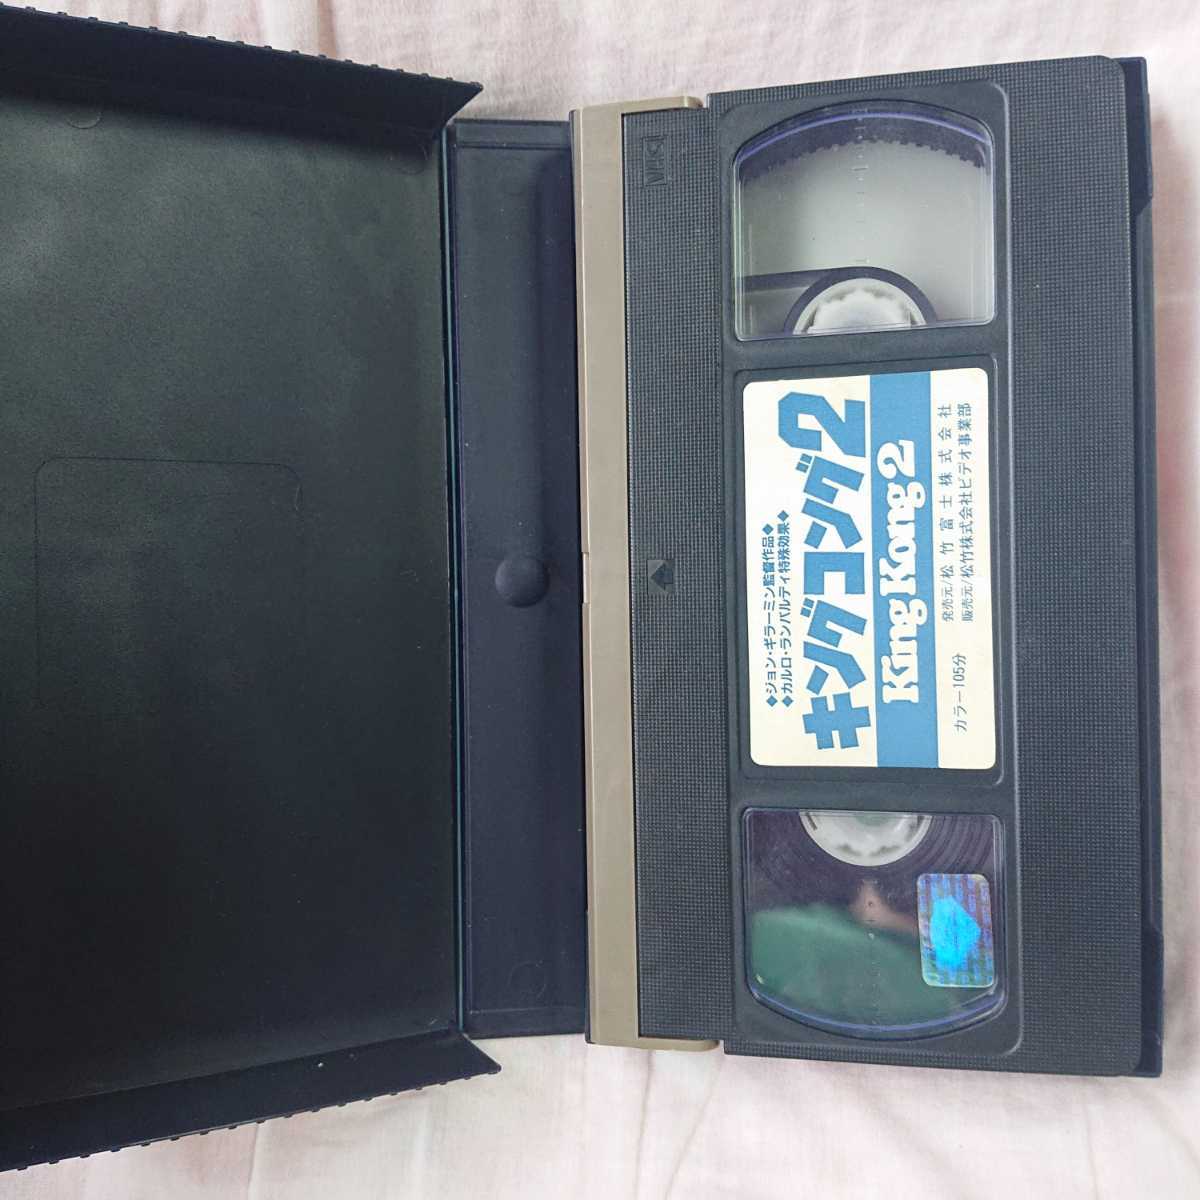  domestic regular goods * King Kong 2| King Kong data, liner no-tsu. go in * videotape * postage included *